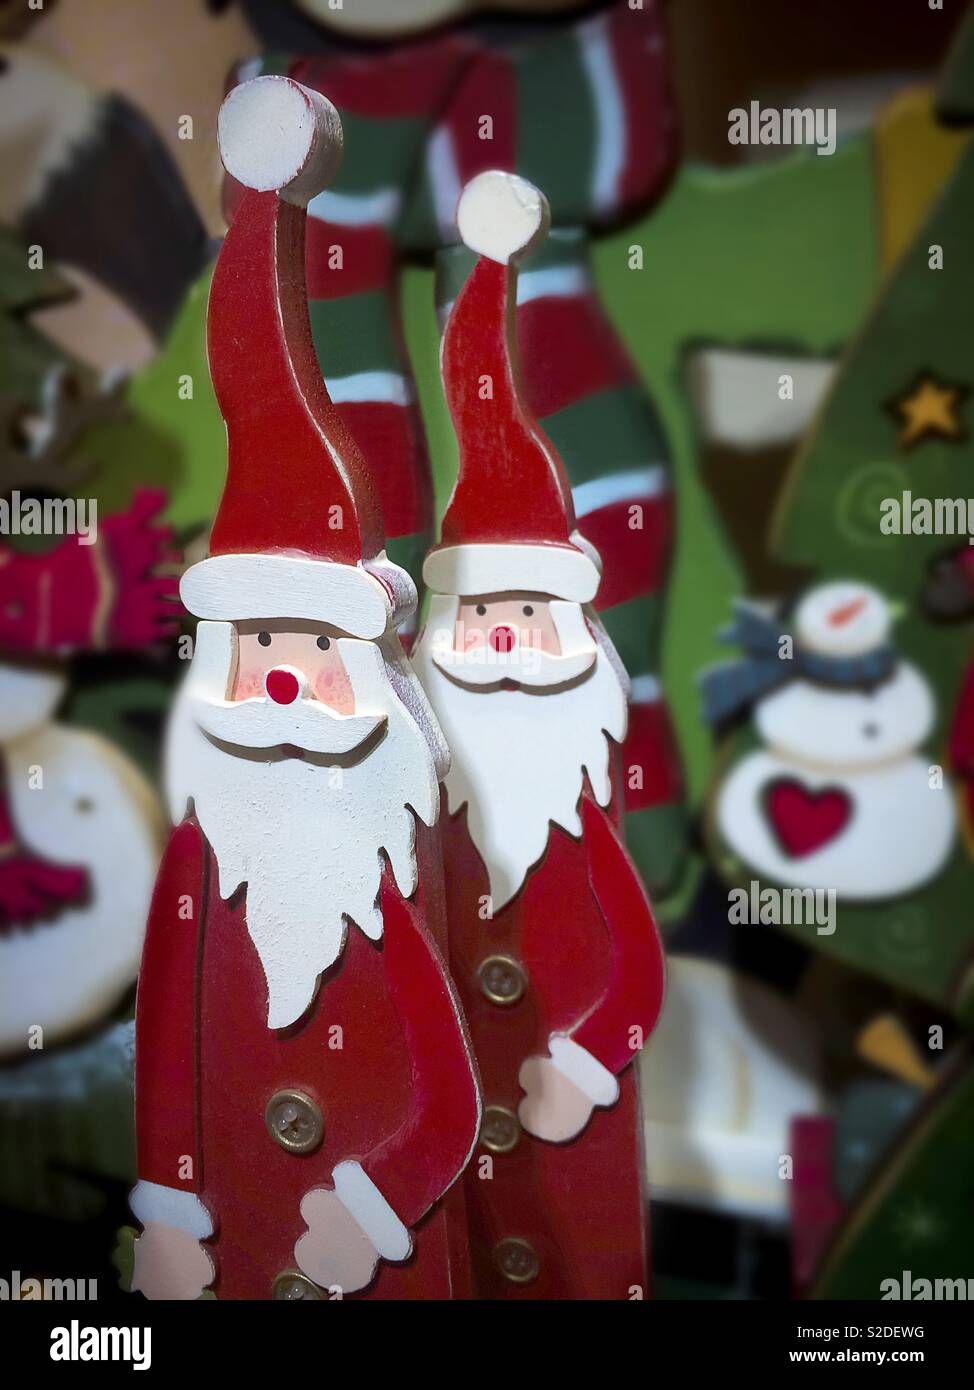 Santa figures xmas decoration Stock Photo